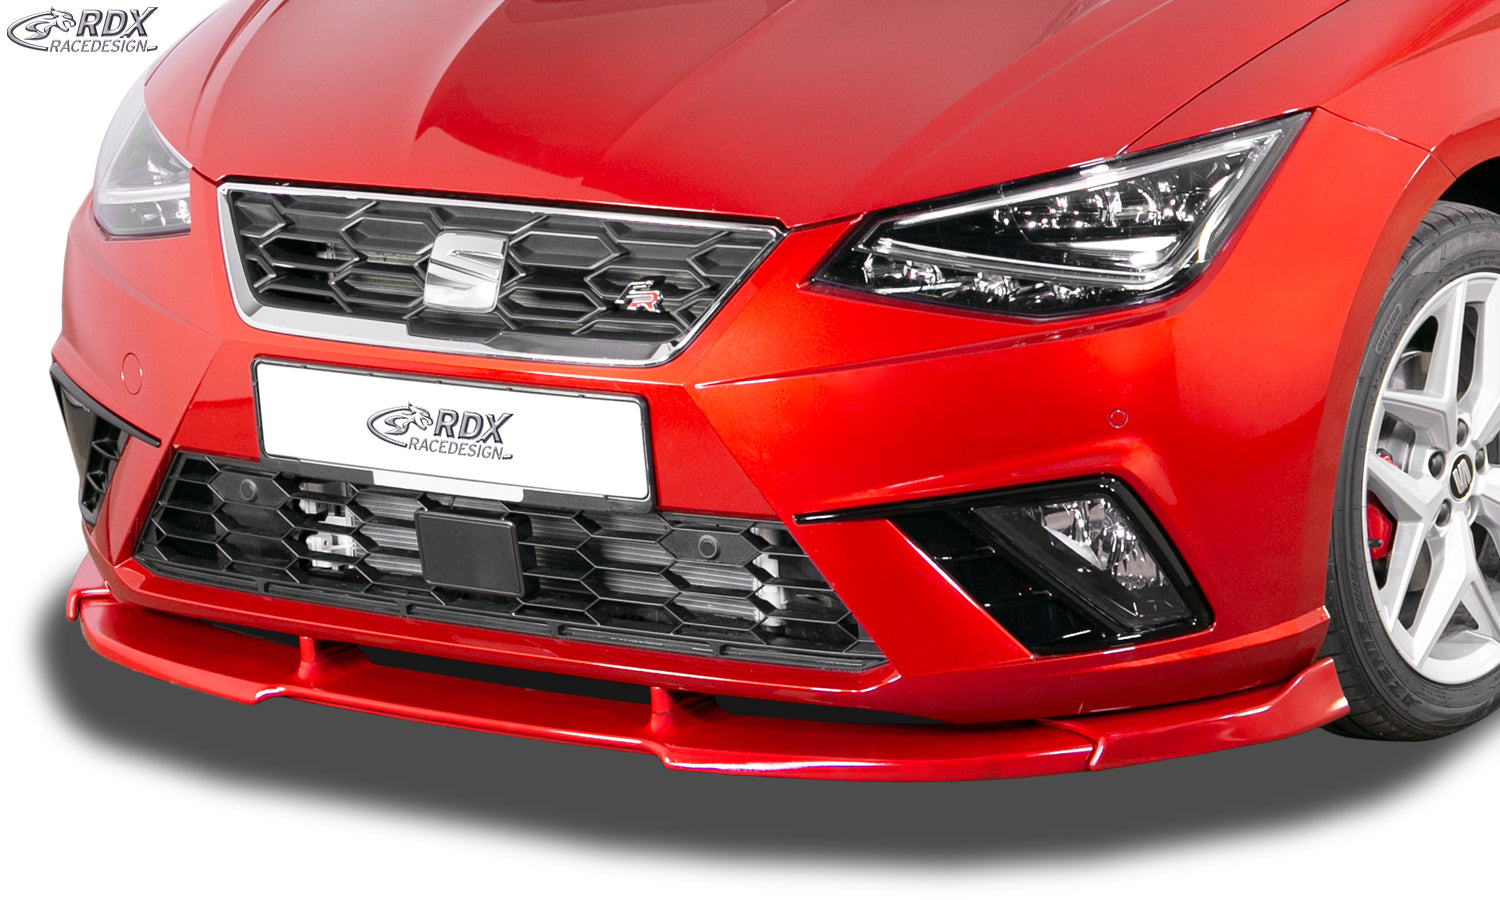 RDX Racedesign Front Bumper Spoiler Vario-X Splitter - Ibiza 6F all models incl FR PU Unpainted